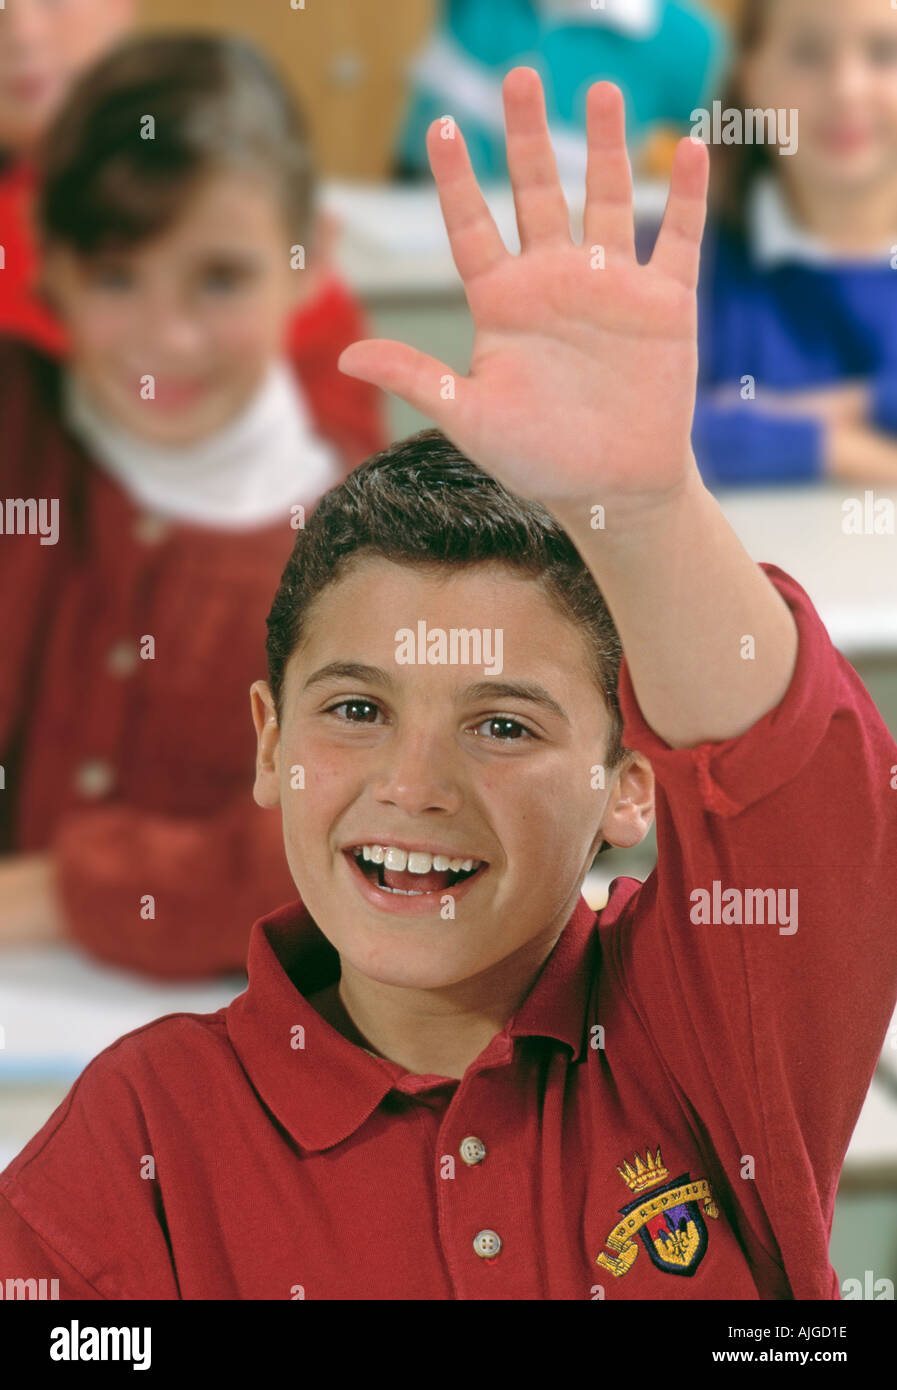 Caucasian male student raising hand in class Stock Photo